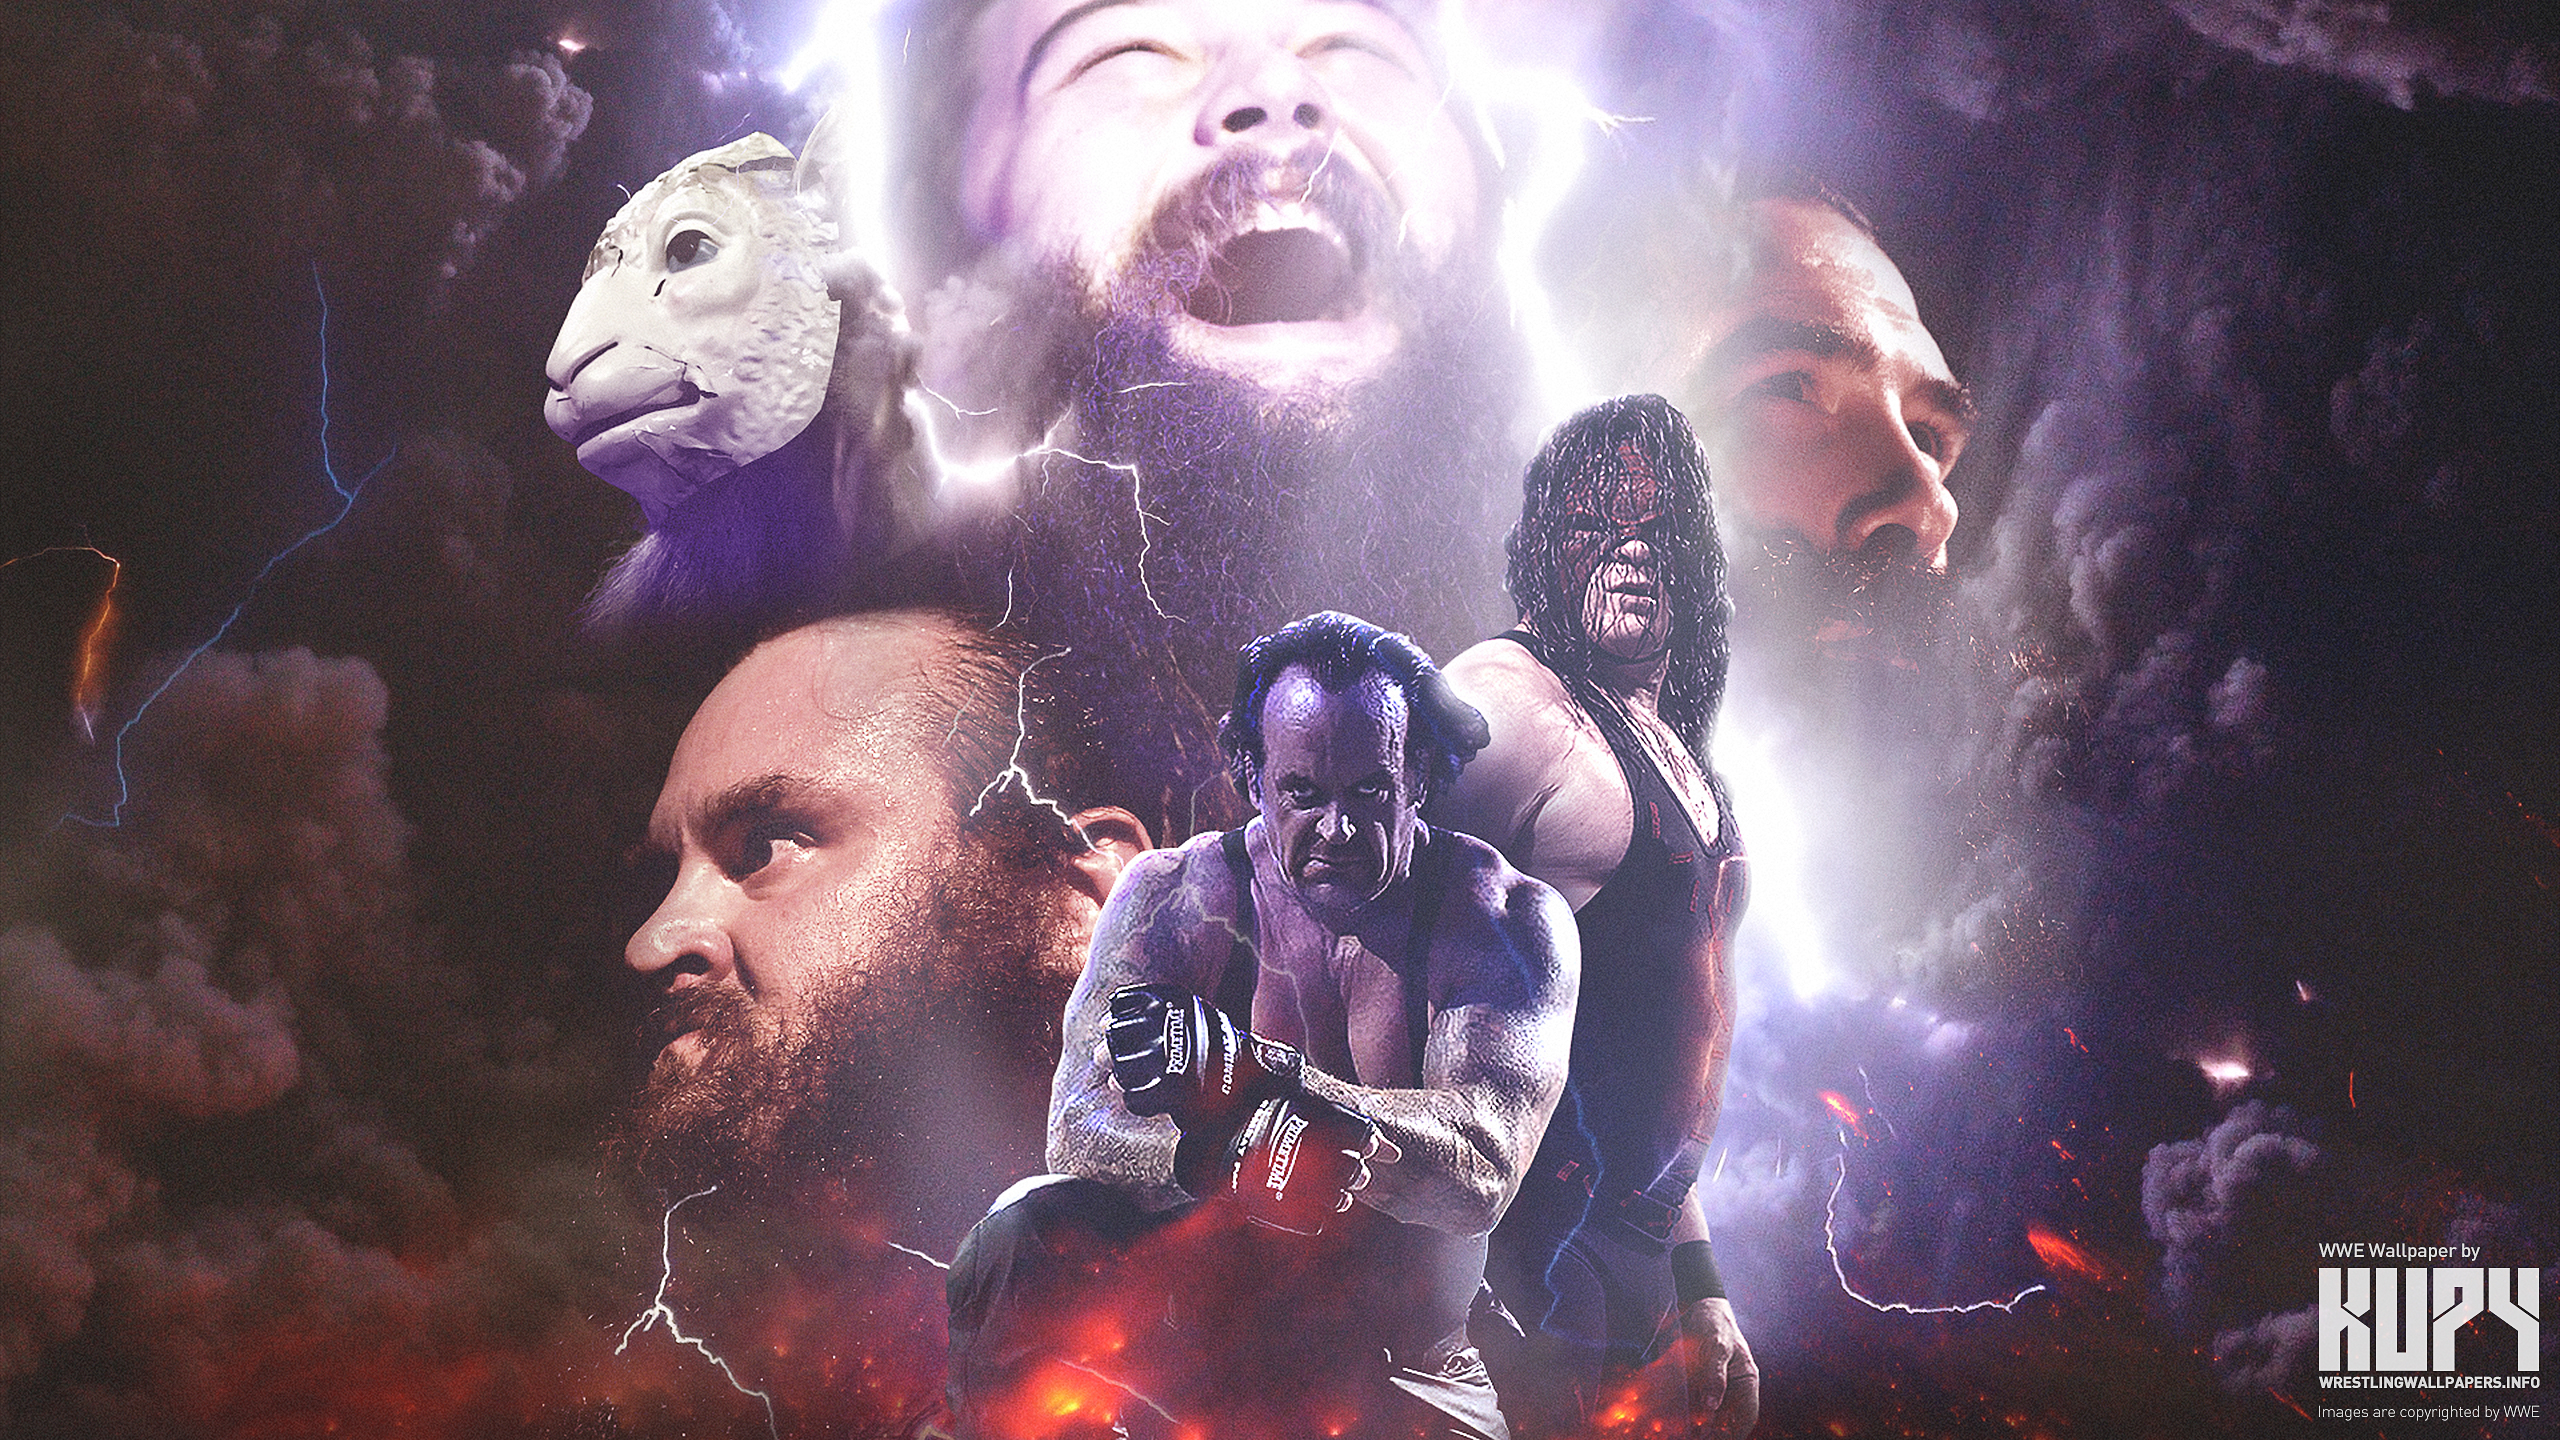 2560x1440 NEW Undertaker \u0026 Kane Brothers of Destruction wallpaper! Kupy Wrestling Wallpapers